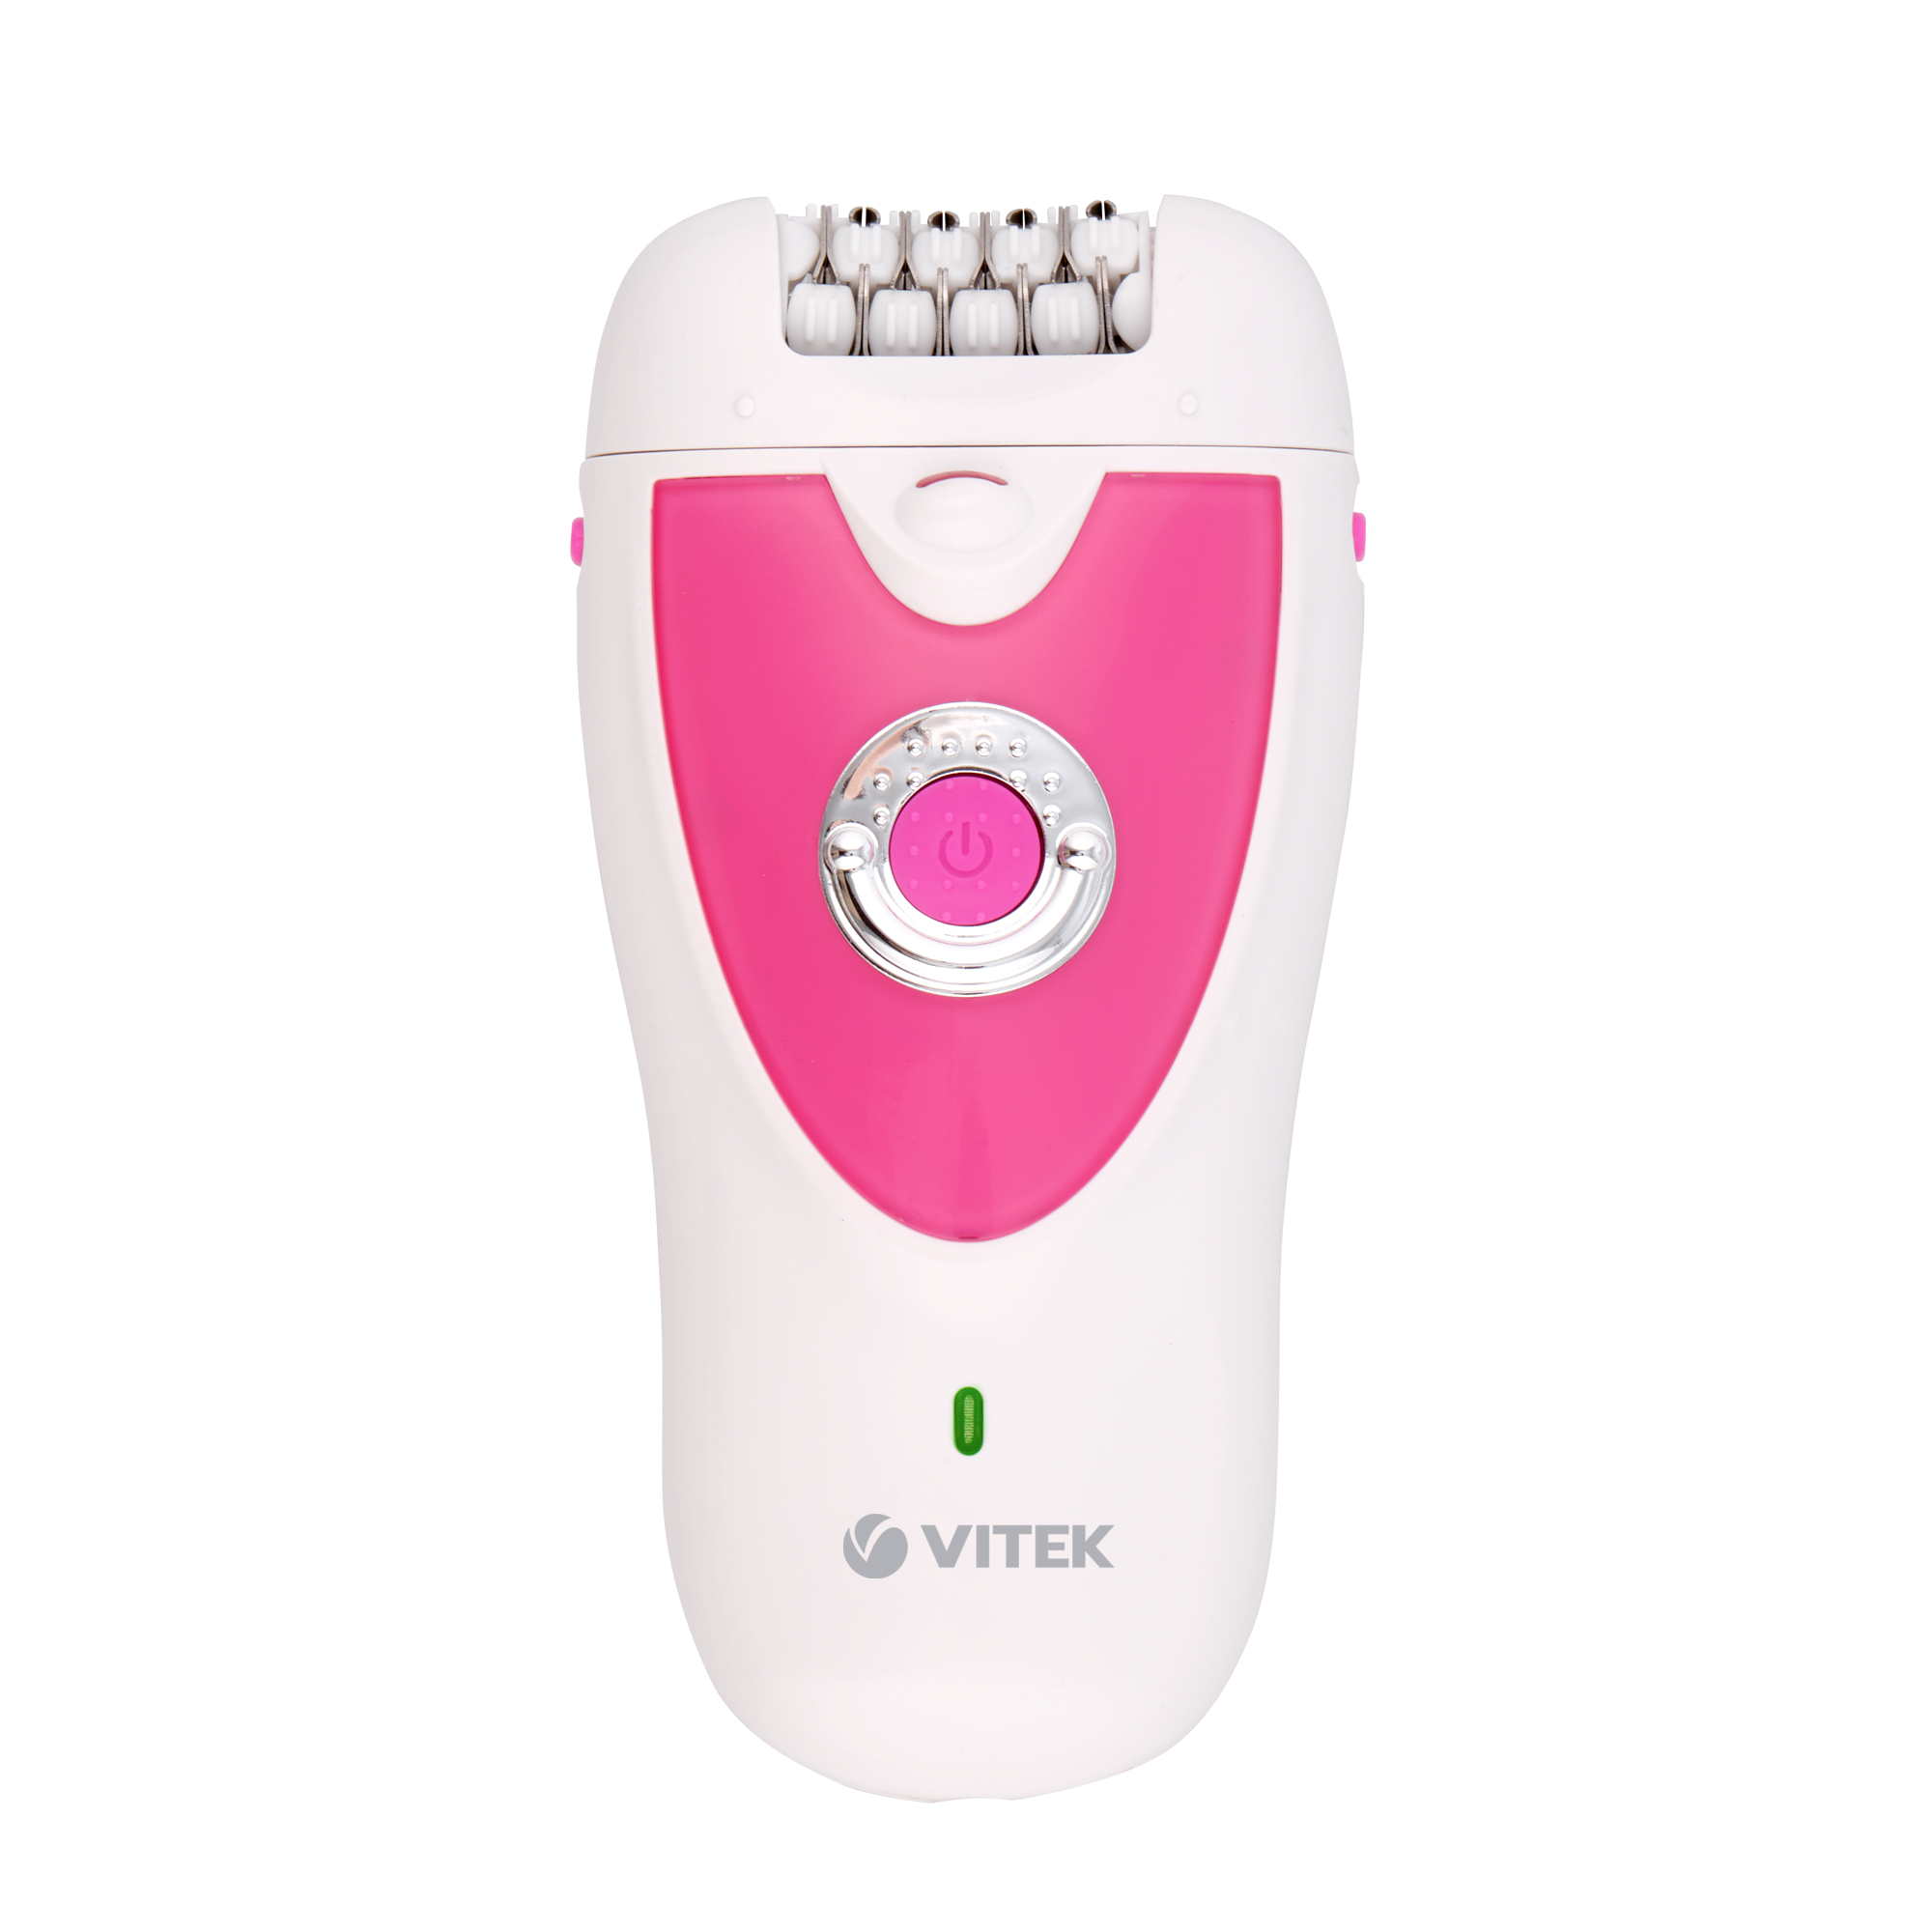 Эпилятор VITEK VT-2244 белый, розовый эпилятор braun s9 ses 9 855 белый розовый